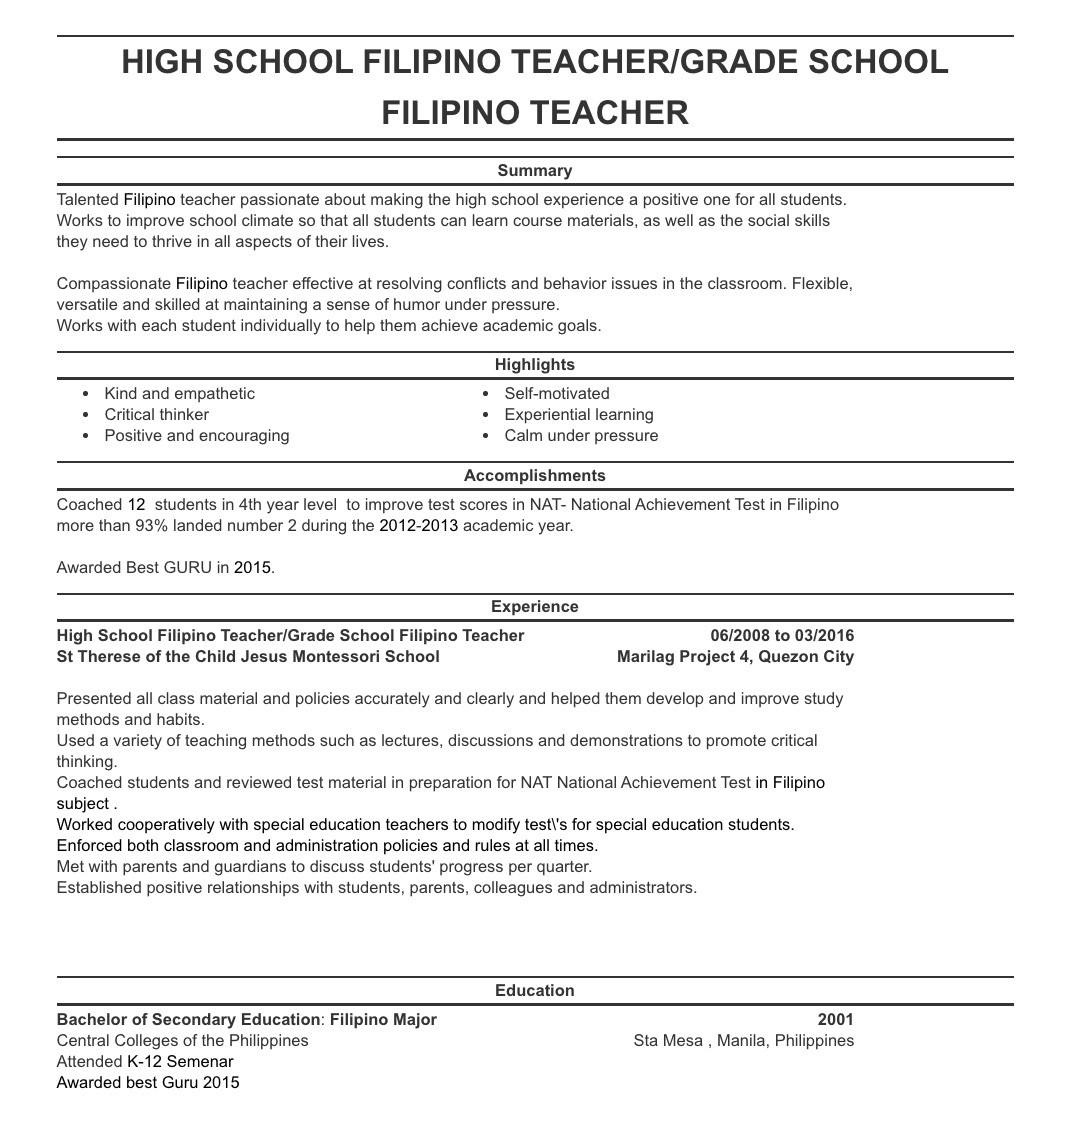 Resume Sample for Teachers In Philippines Resume Sample for Teachers In the Philippines – Filipiknow